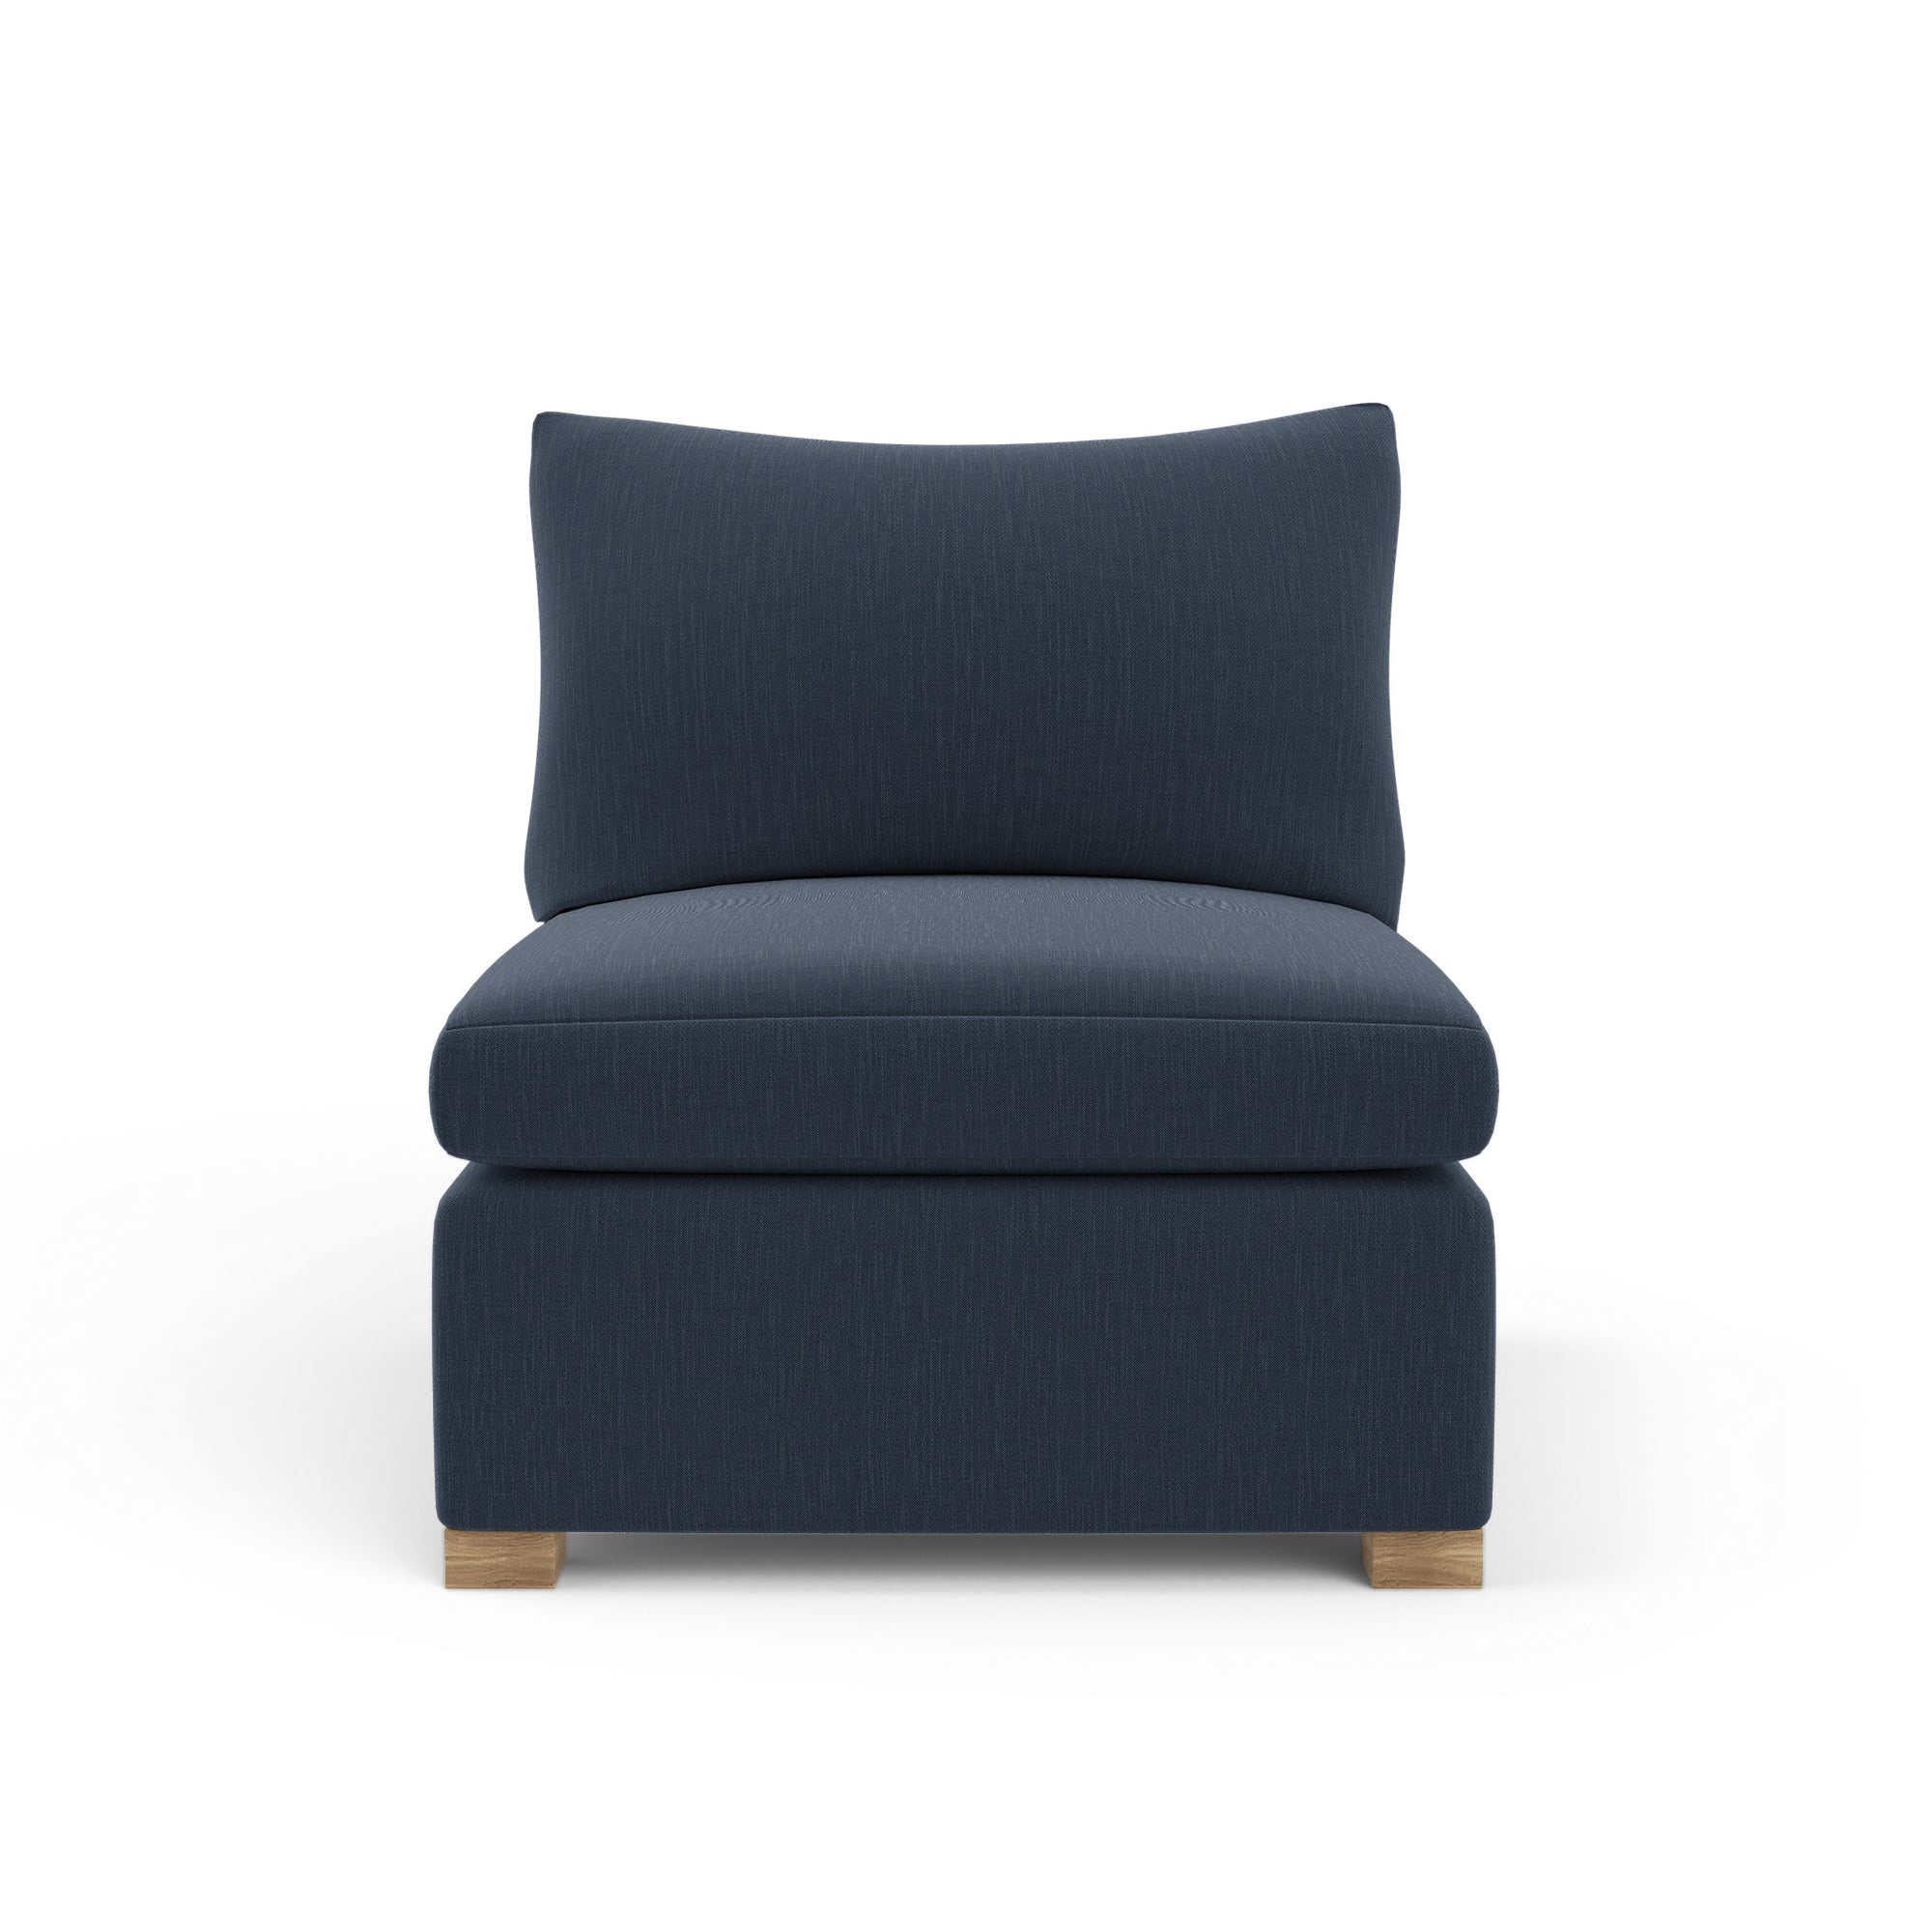 Evans Armless Chair - Bluebell Box Weave Linen